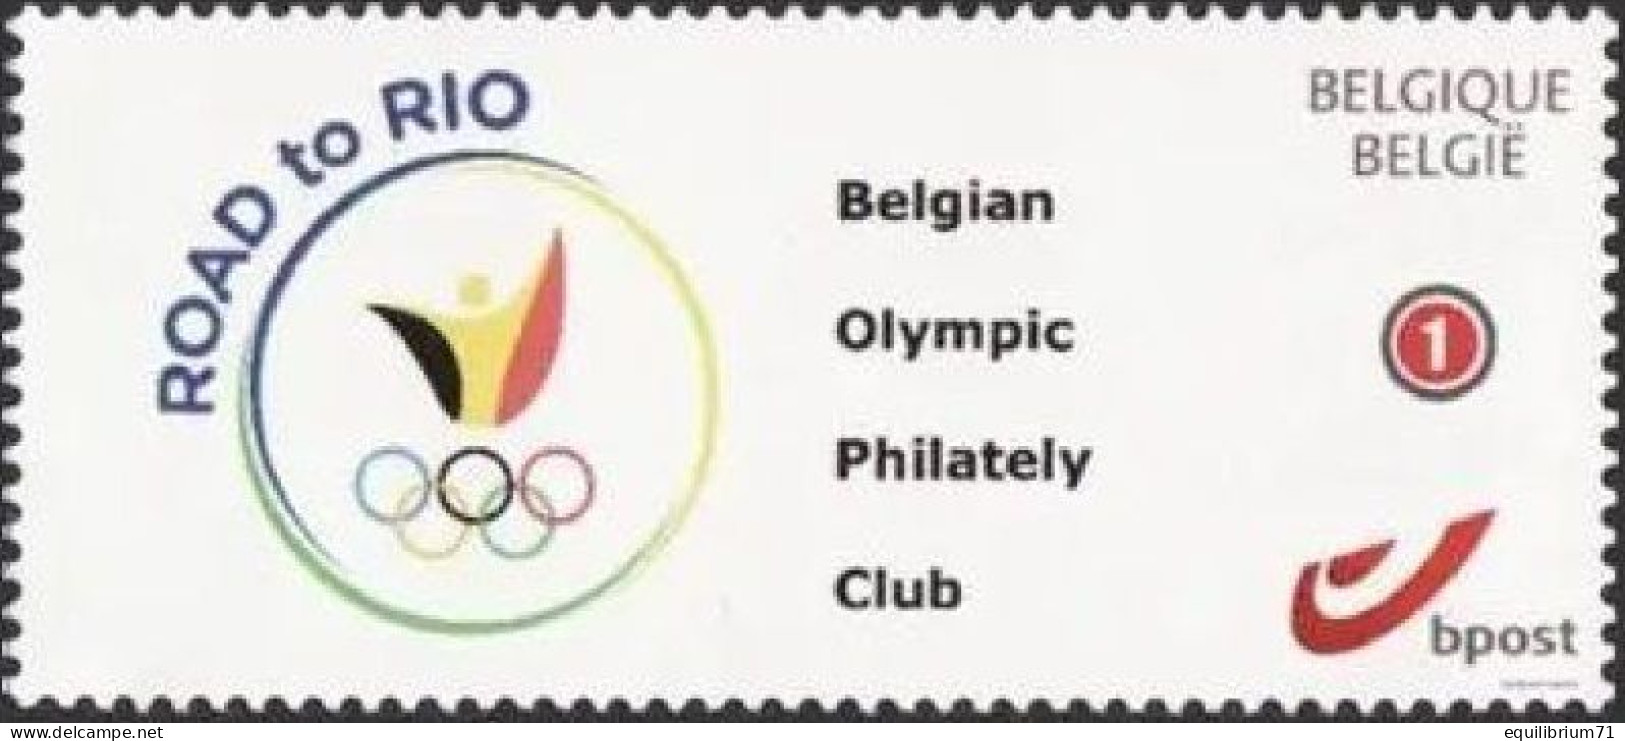 DUOSTAMP** / MYSTAMP** - Belgian Olympic Philately Club - BOPC - ROAD TO TOKYO - Summer 2020: Tokyo